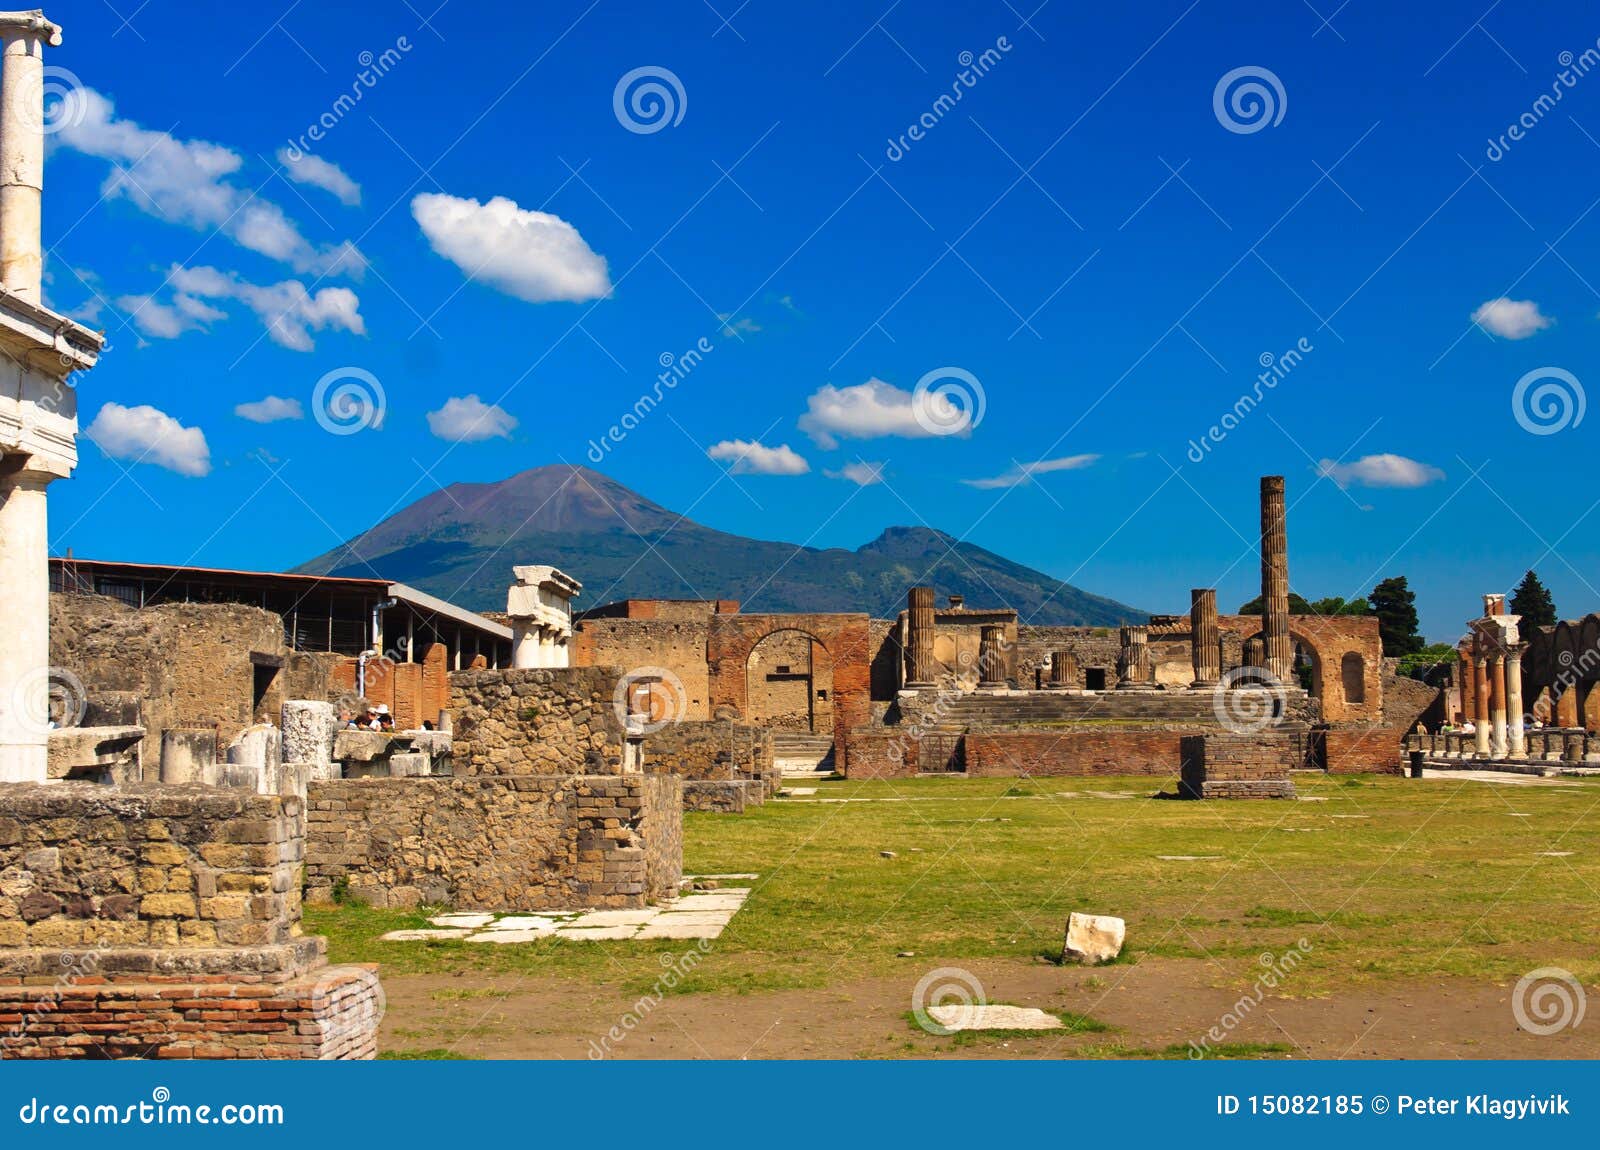 ruined building in pompei